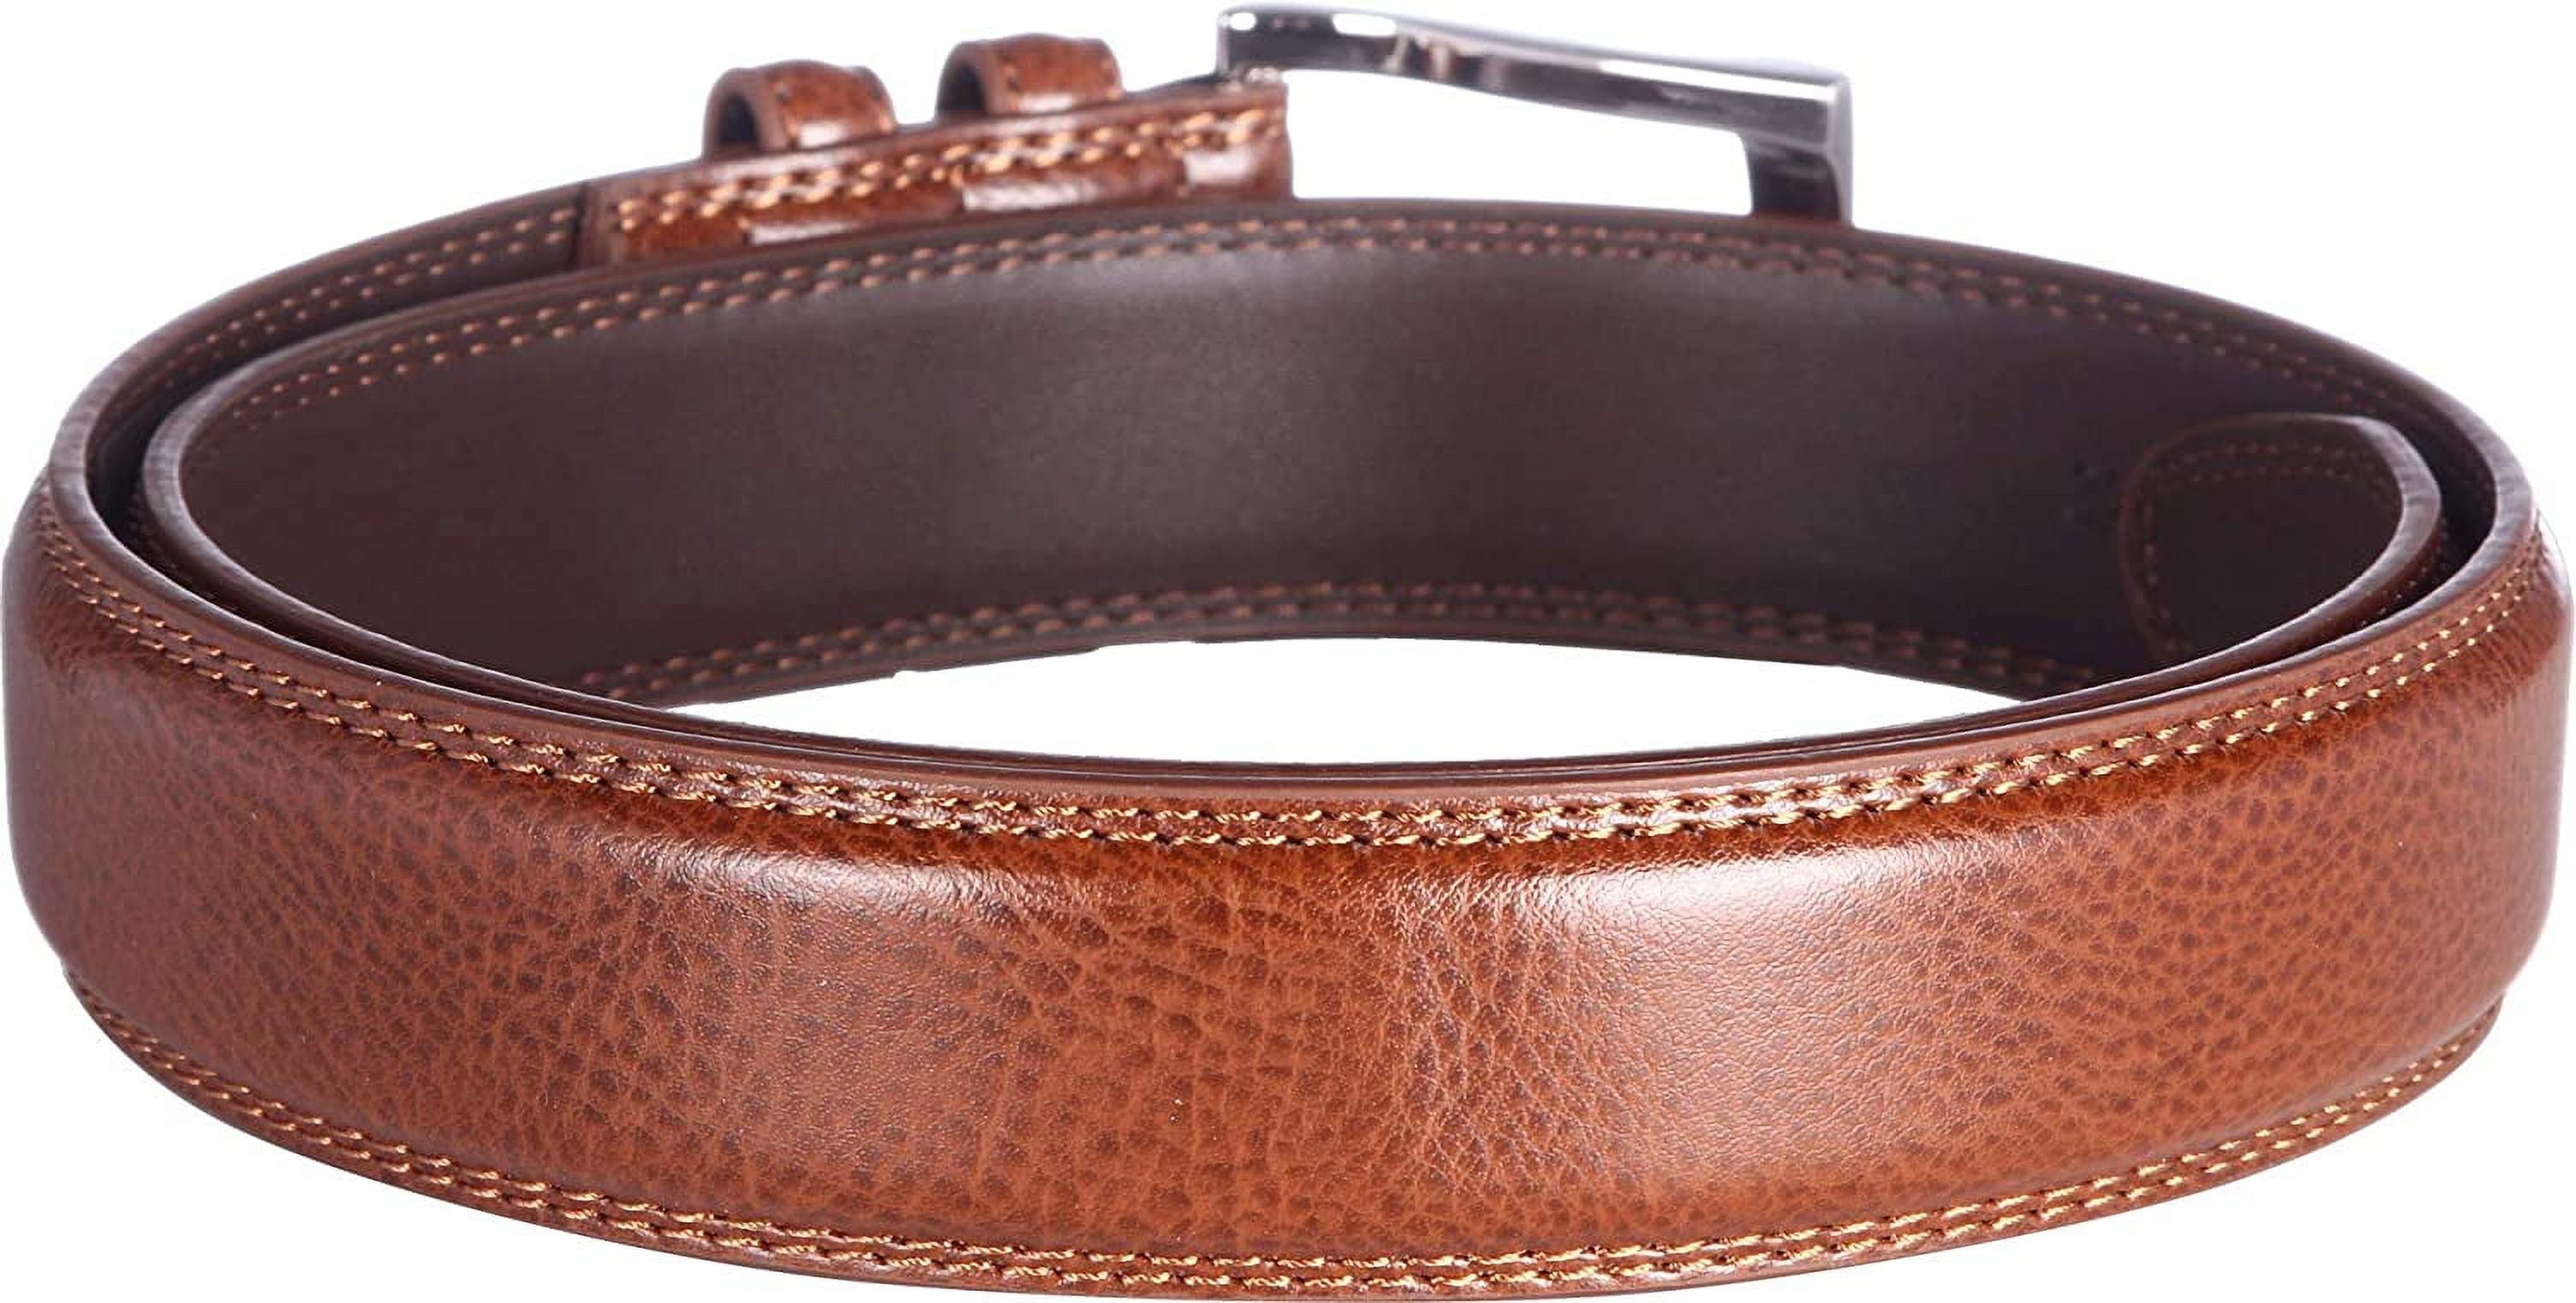 Florsheim Men's Pebble Grain Leather Belt 32MM, Cognac, 38 - image 2 of 3